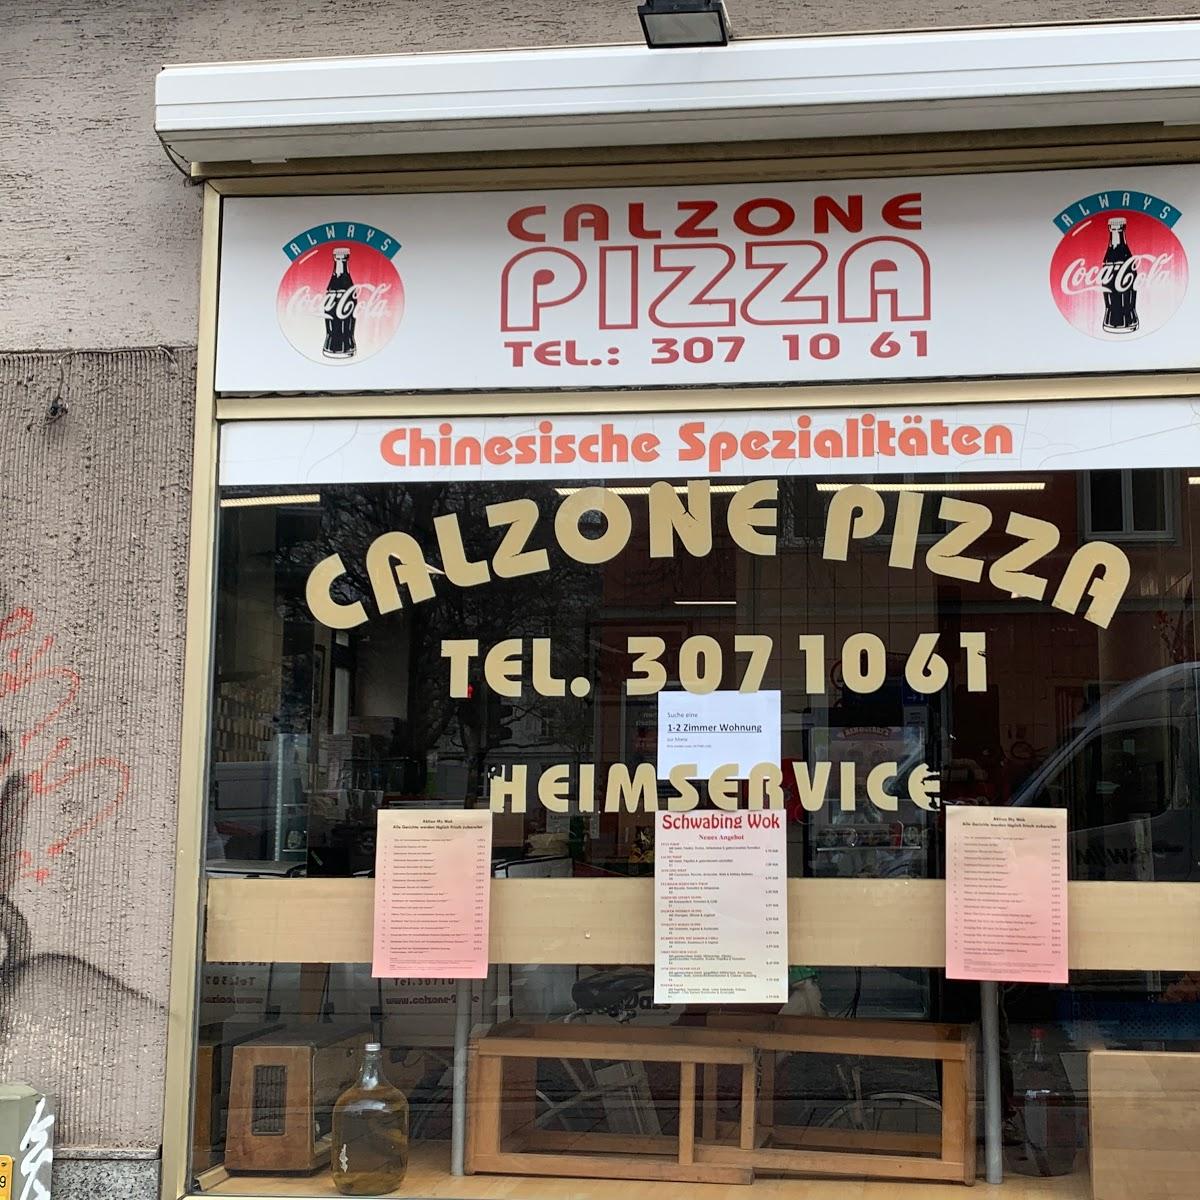 Restaurant "Calzone Pizza Heimservice Schwabing Wok" in München